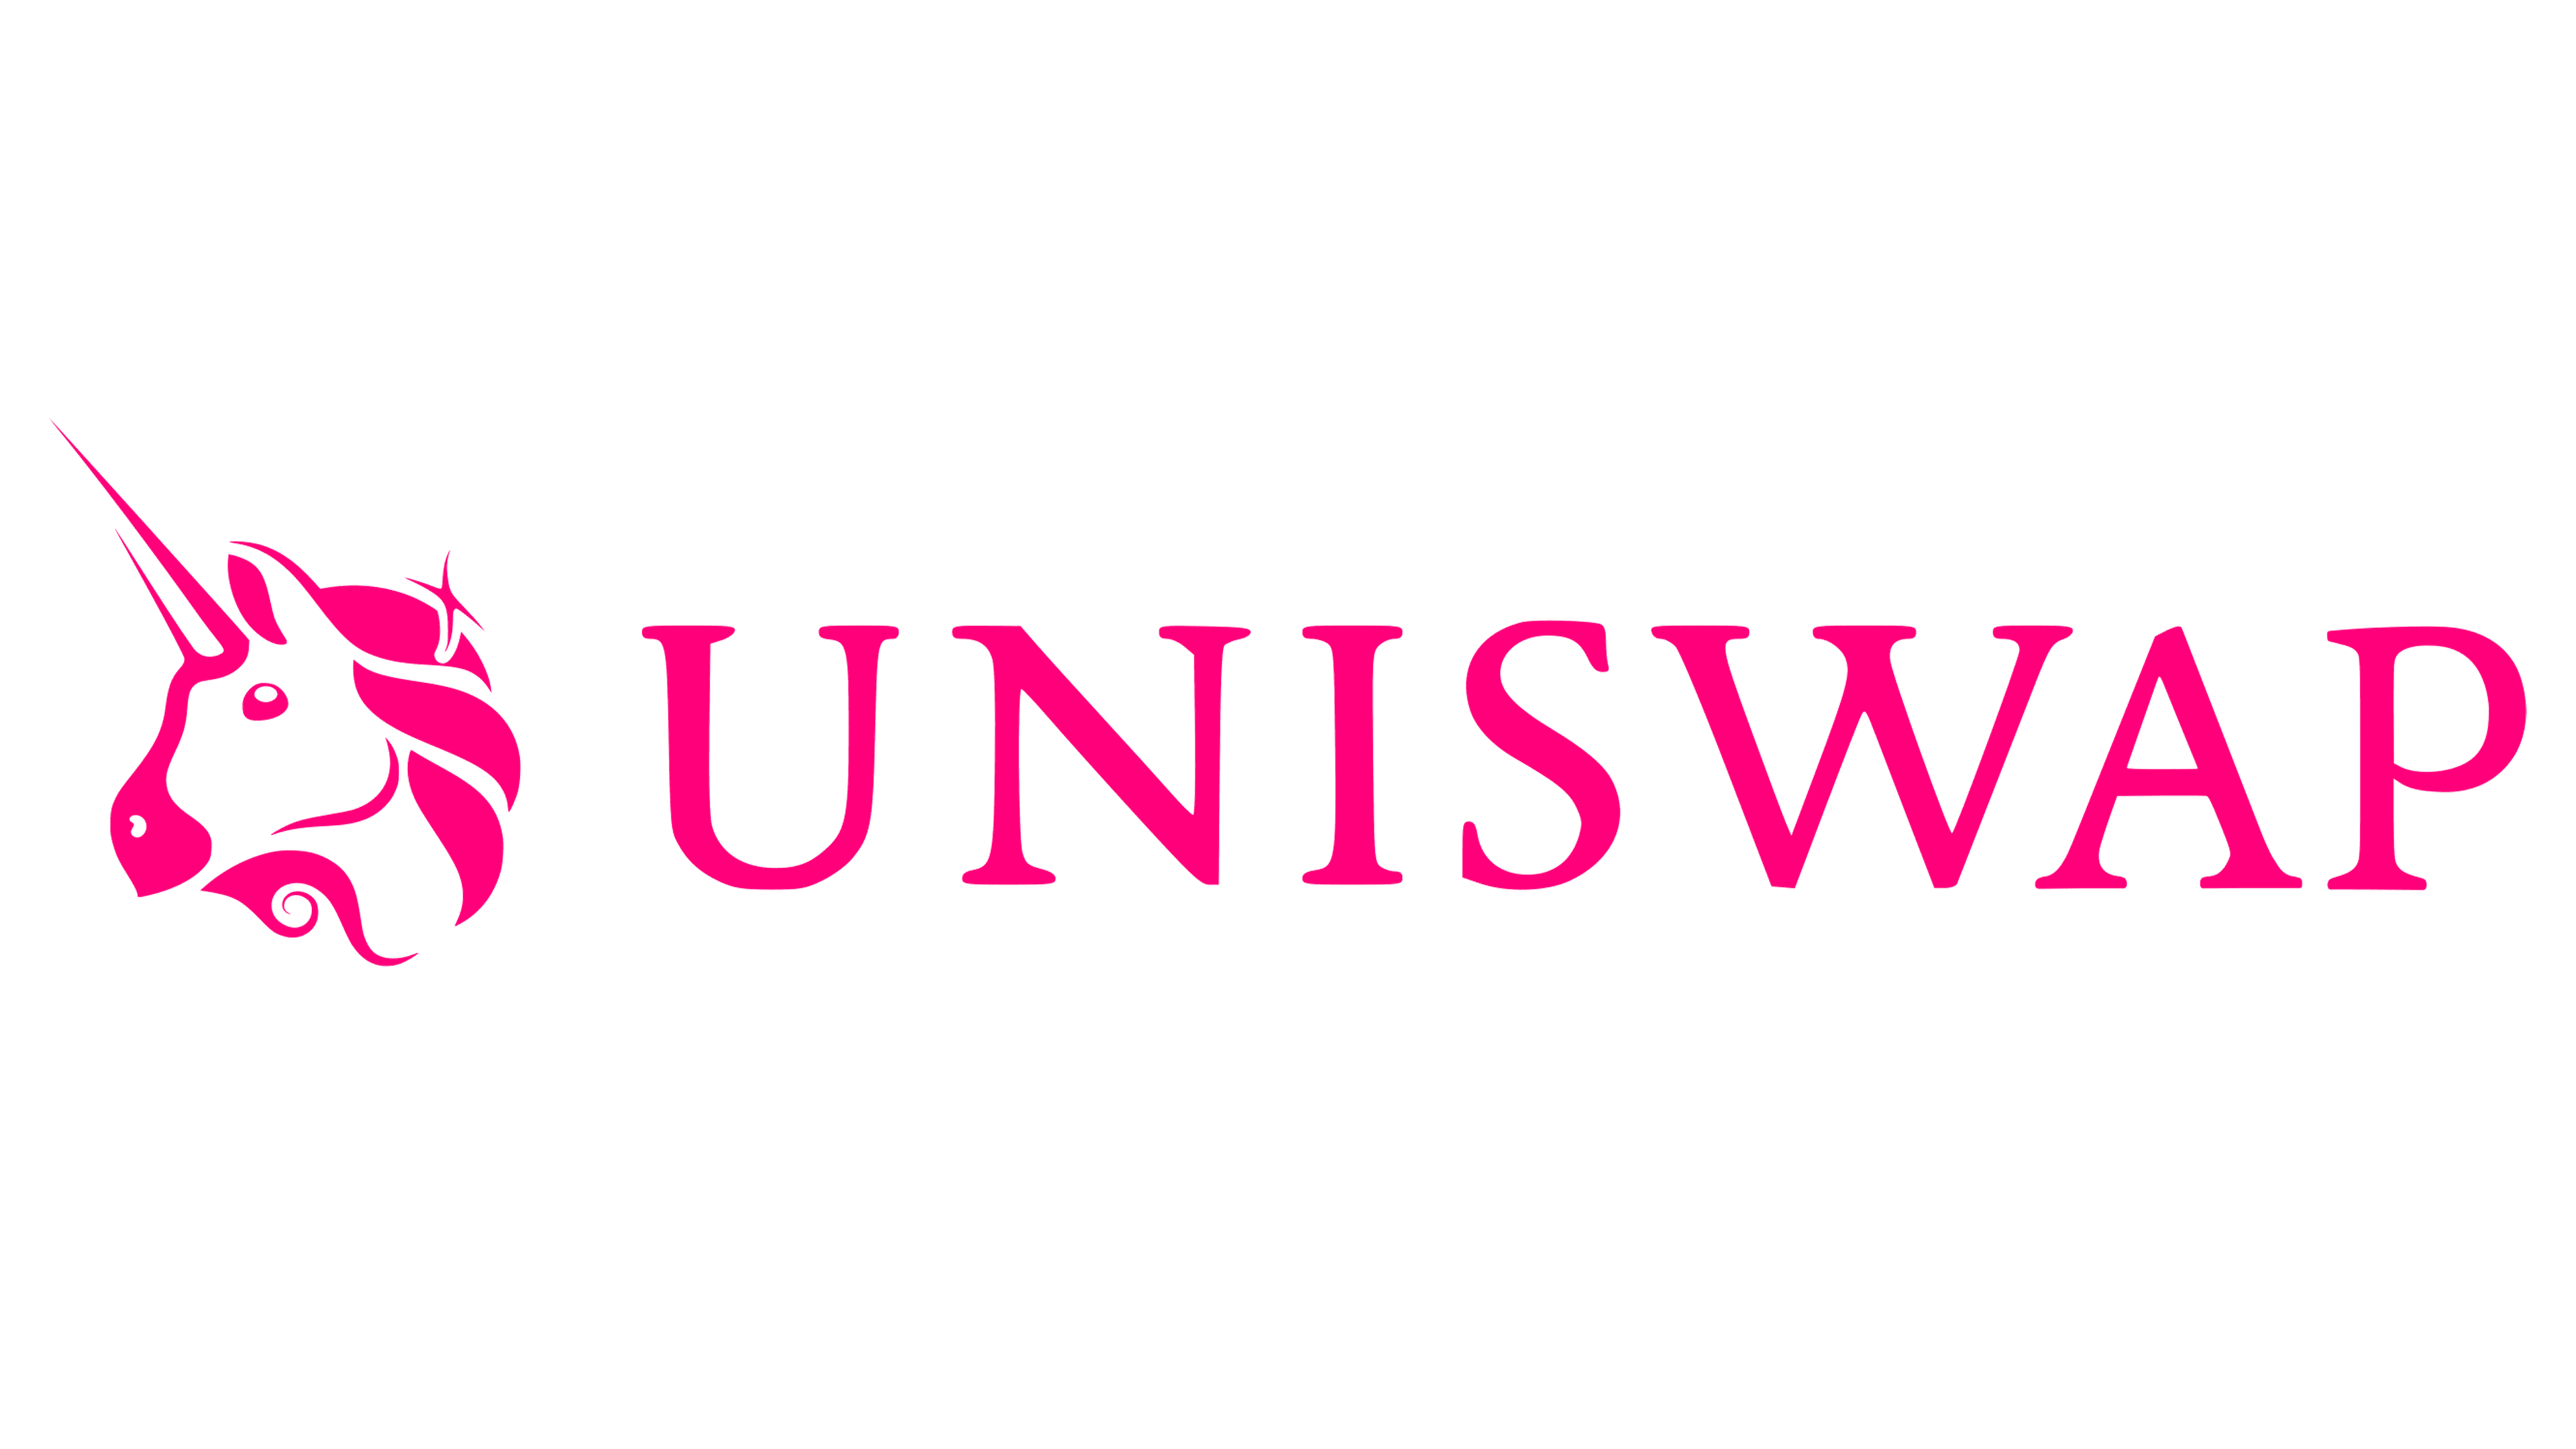 История успеха Uniswap (UNI): От прототипа до мейнстрима